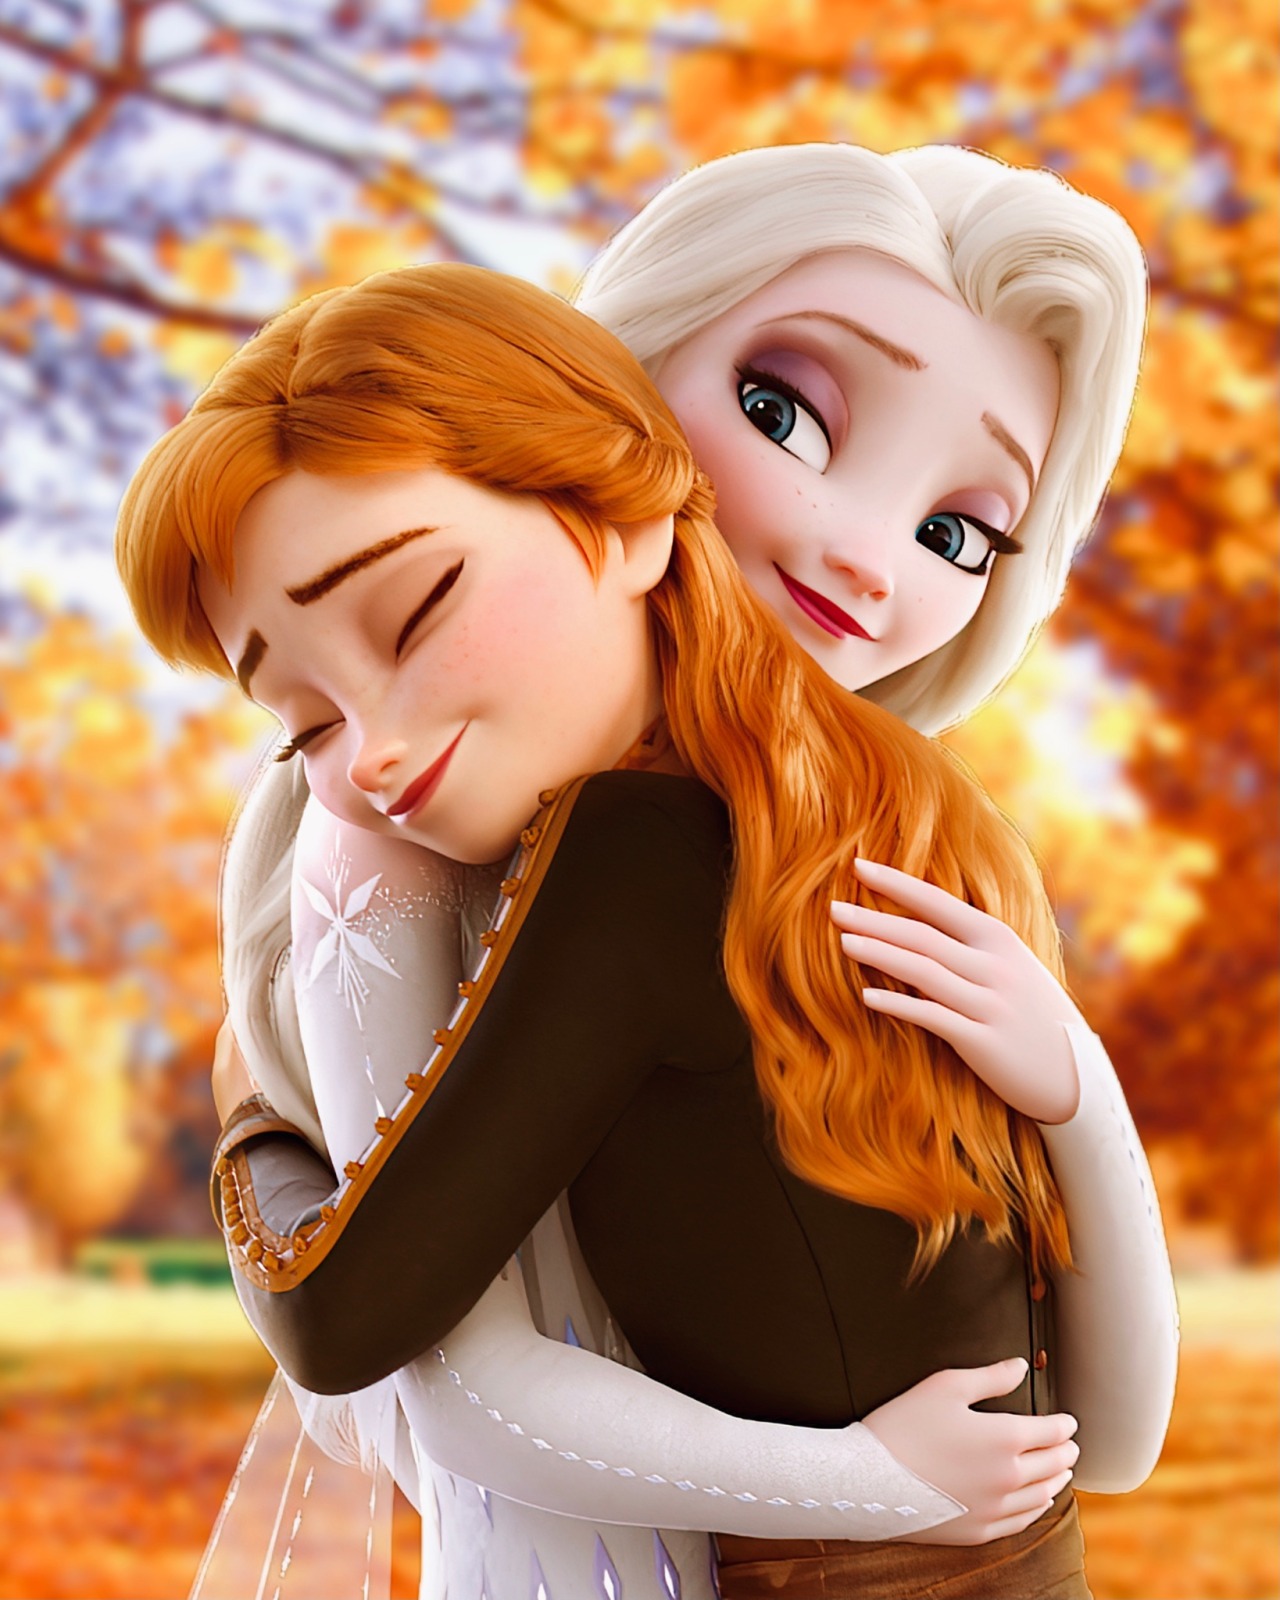 Mobile wallpaper Movie Anna Frozen Elsa Frozen Frozen 2 1433283  download the picture for free